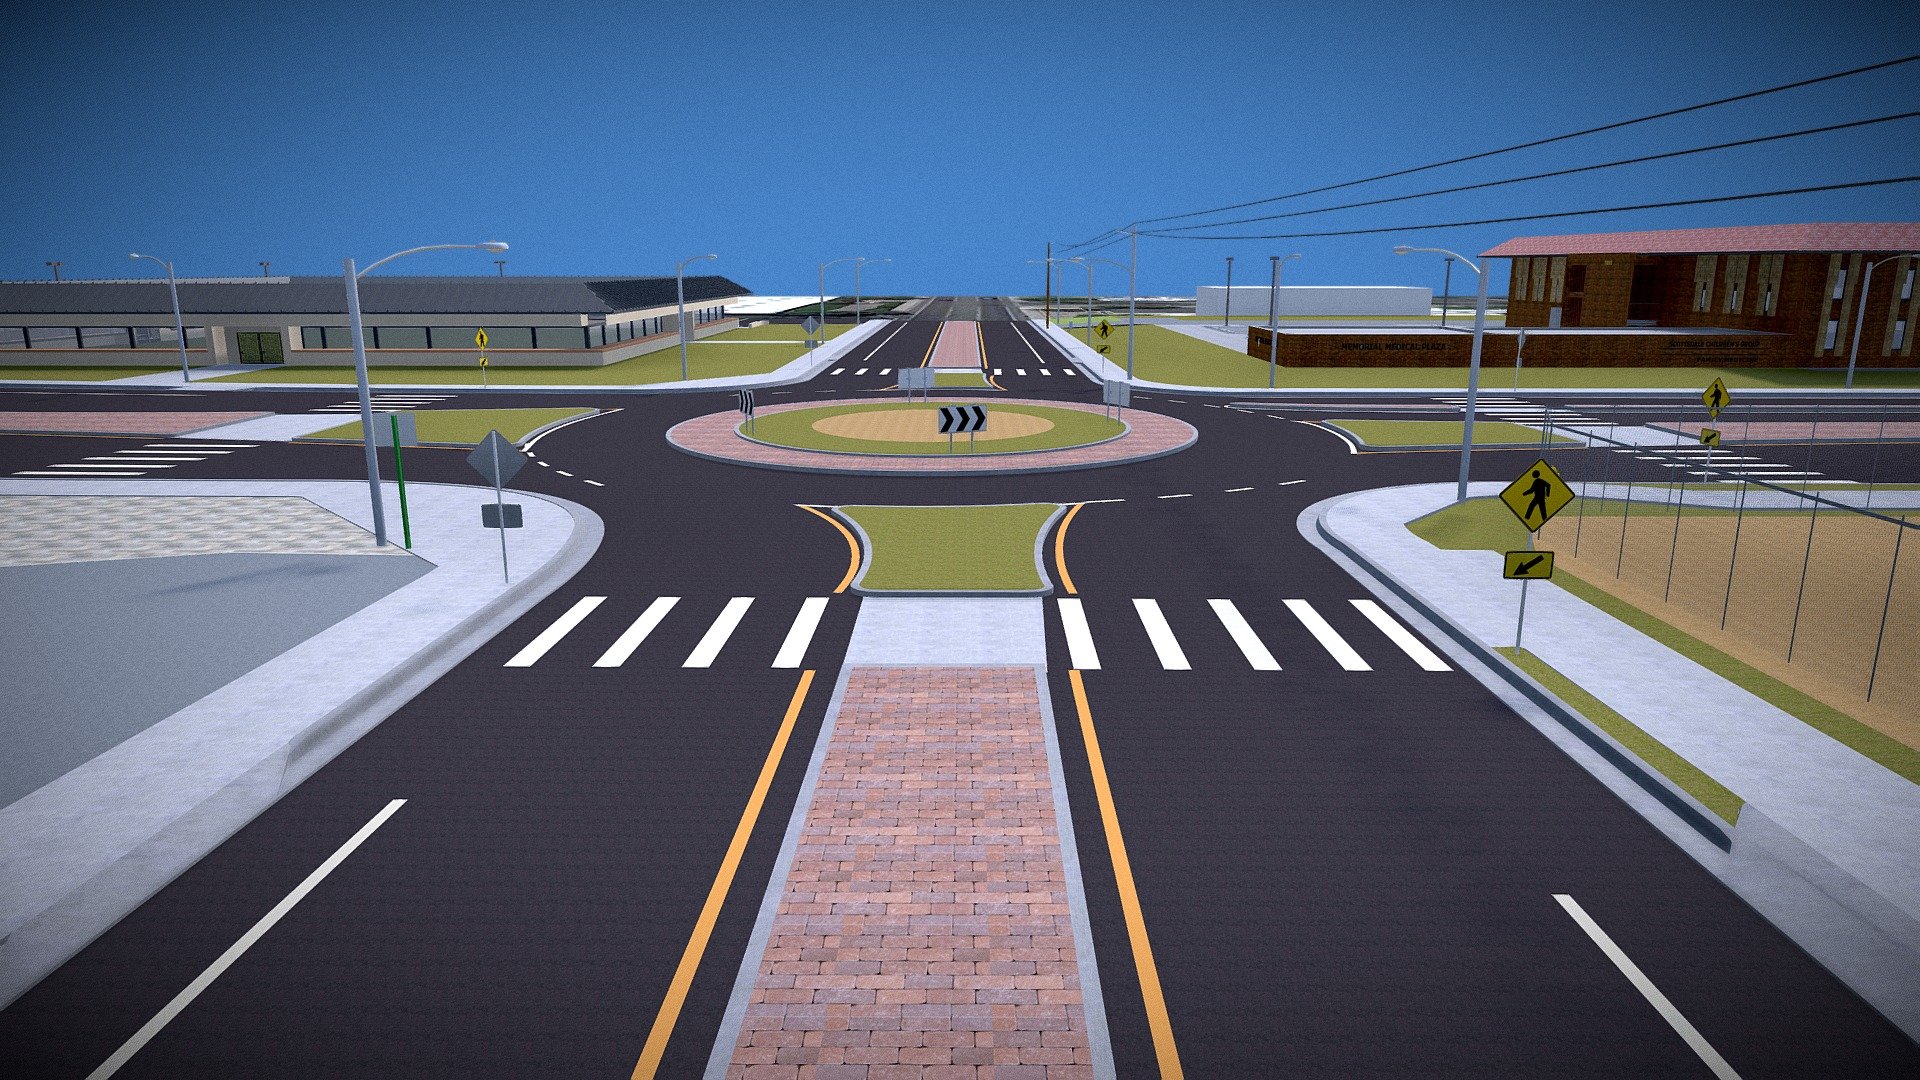 Roundabout10.1.19-1 - 3D model by Classen Graphics (@classen.graphics) 3d model